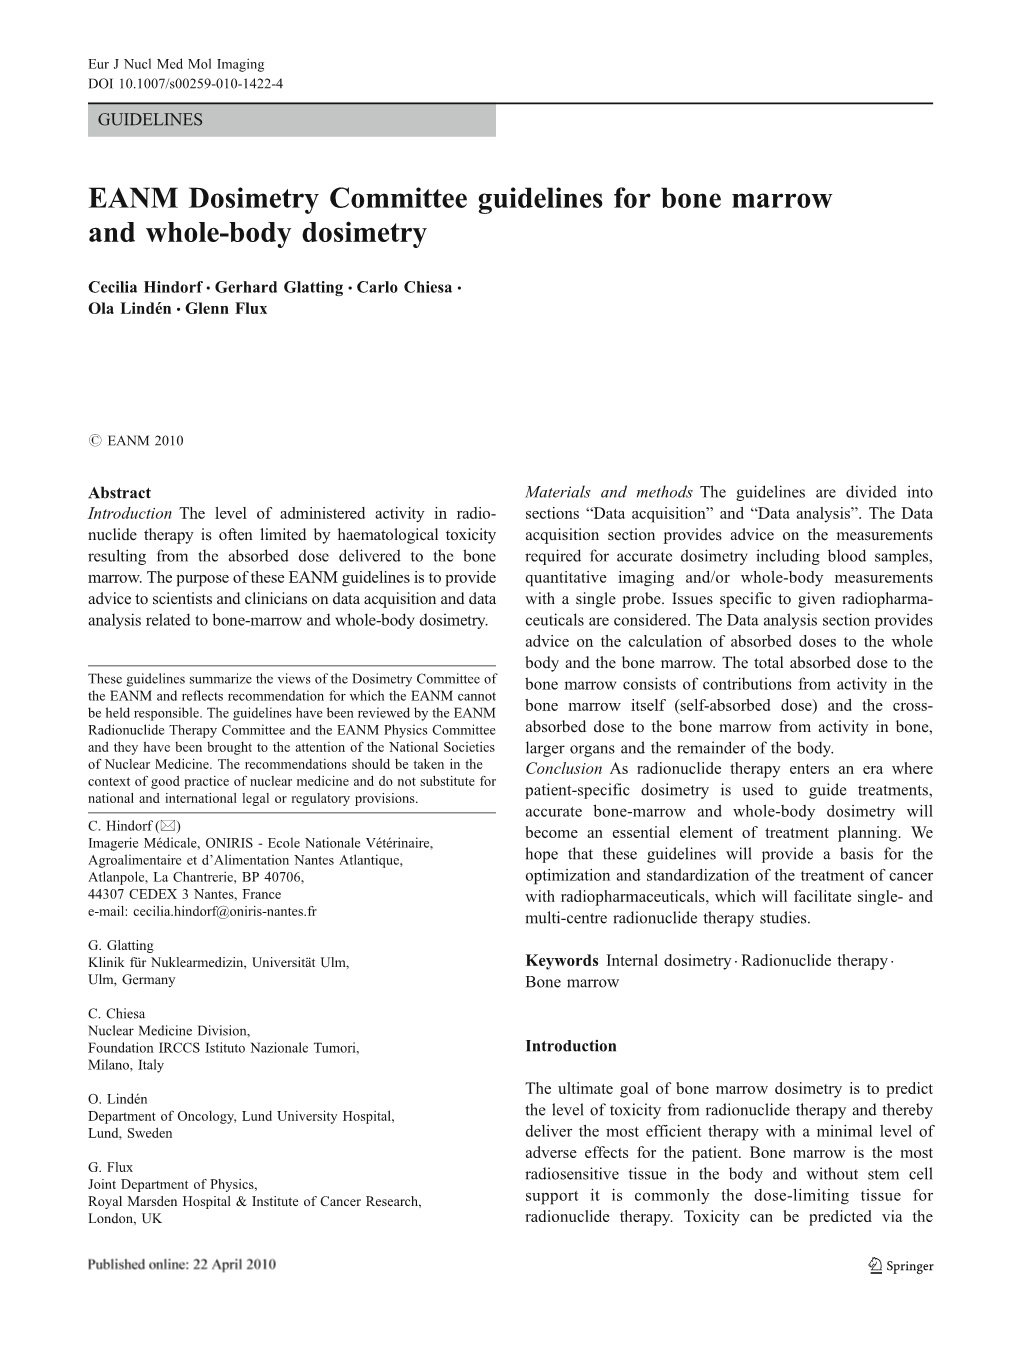 EANM Dosimetry Committee Guidelines for Bone Marrow and Whole-Body Dosimetry